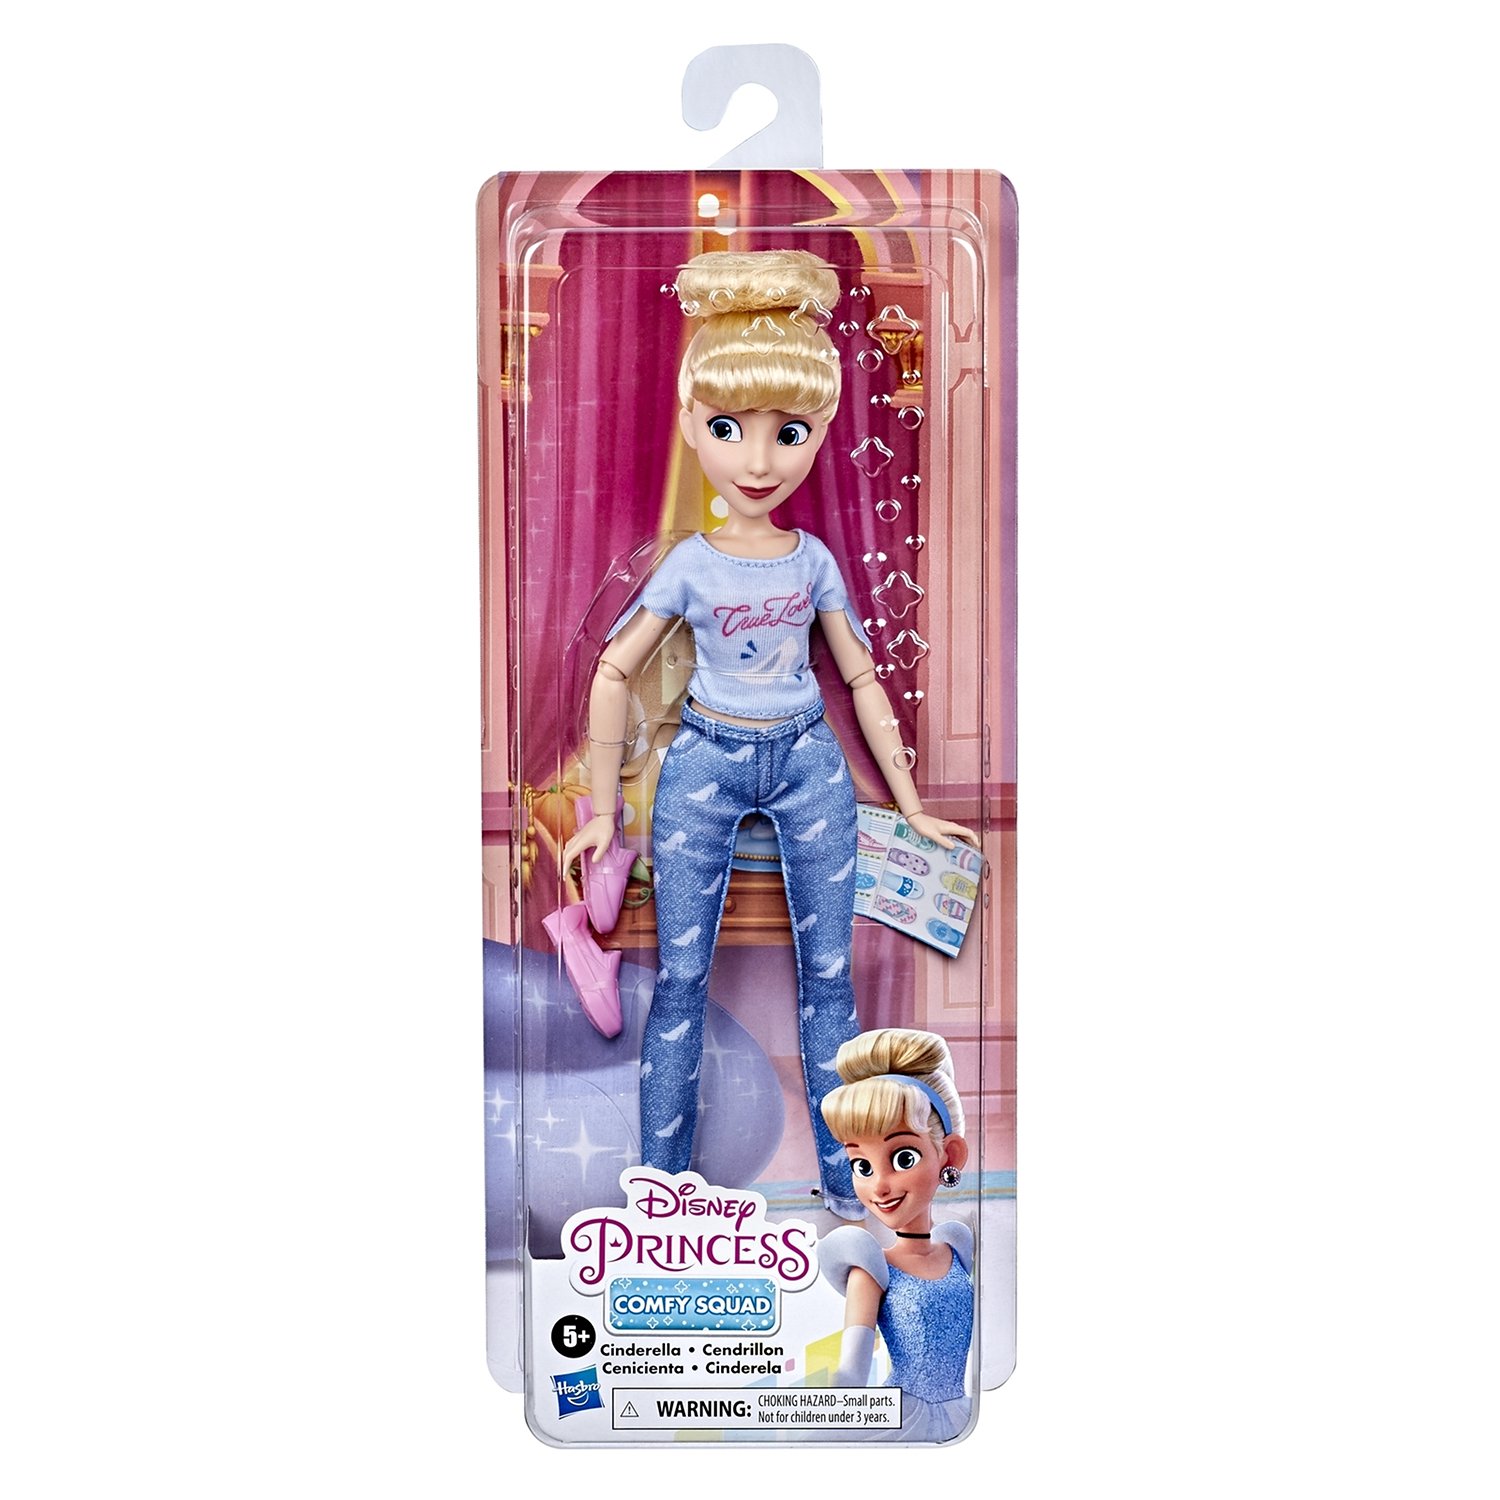 Кукла Disney Princess - Комфи Золушка  